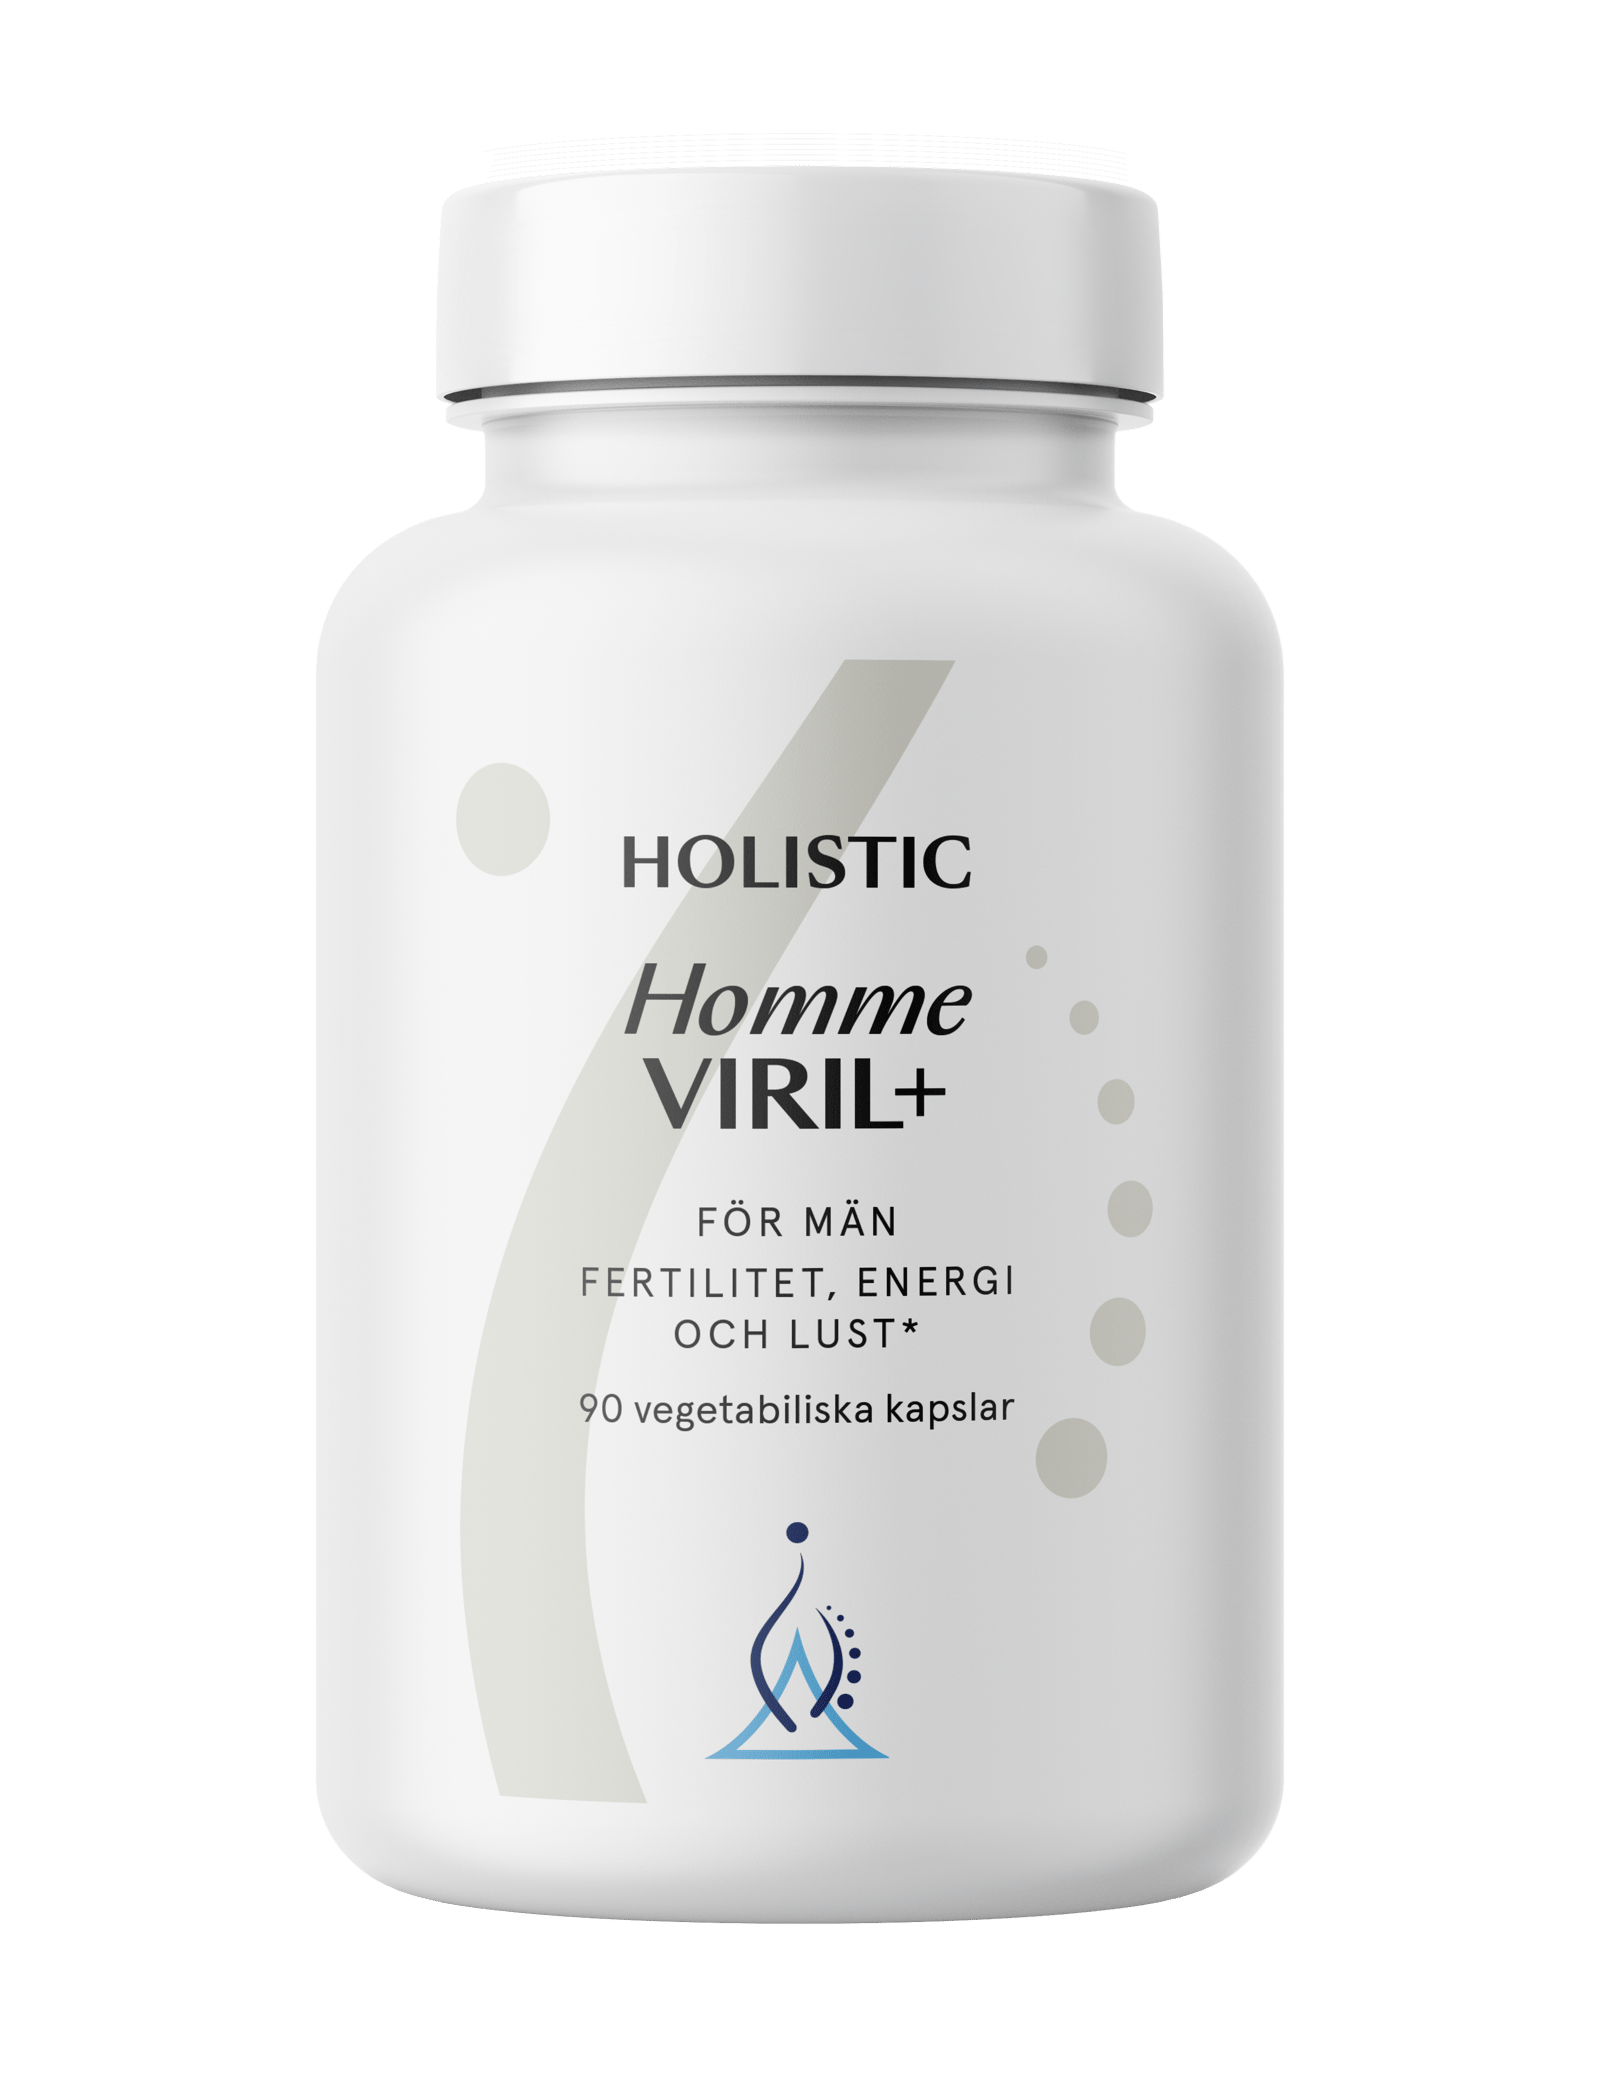 Holistic Homme Viril+ 90 vegetabiliska kapslar